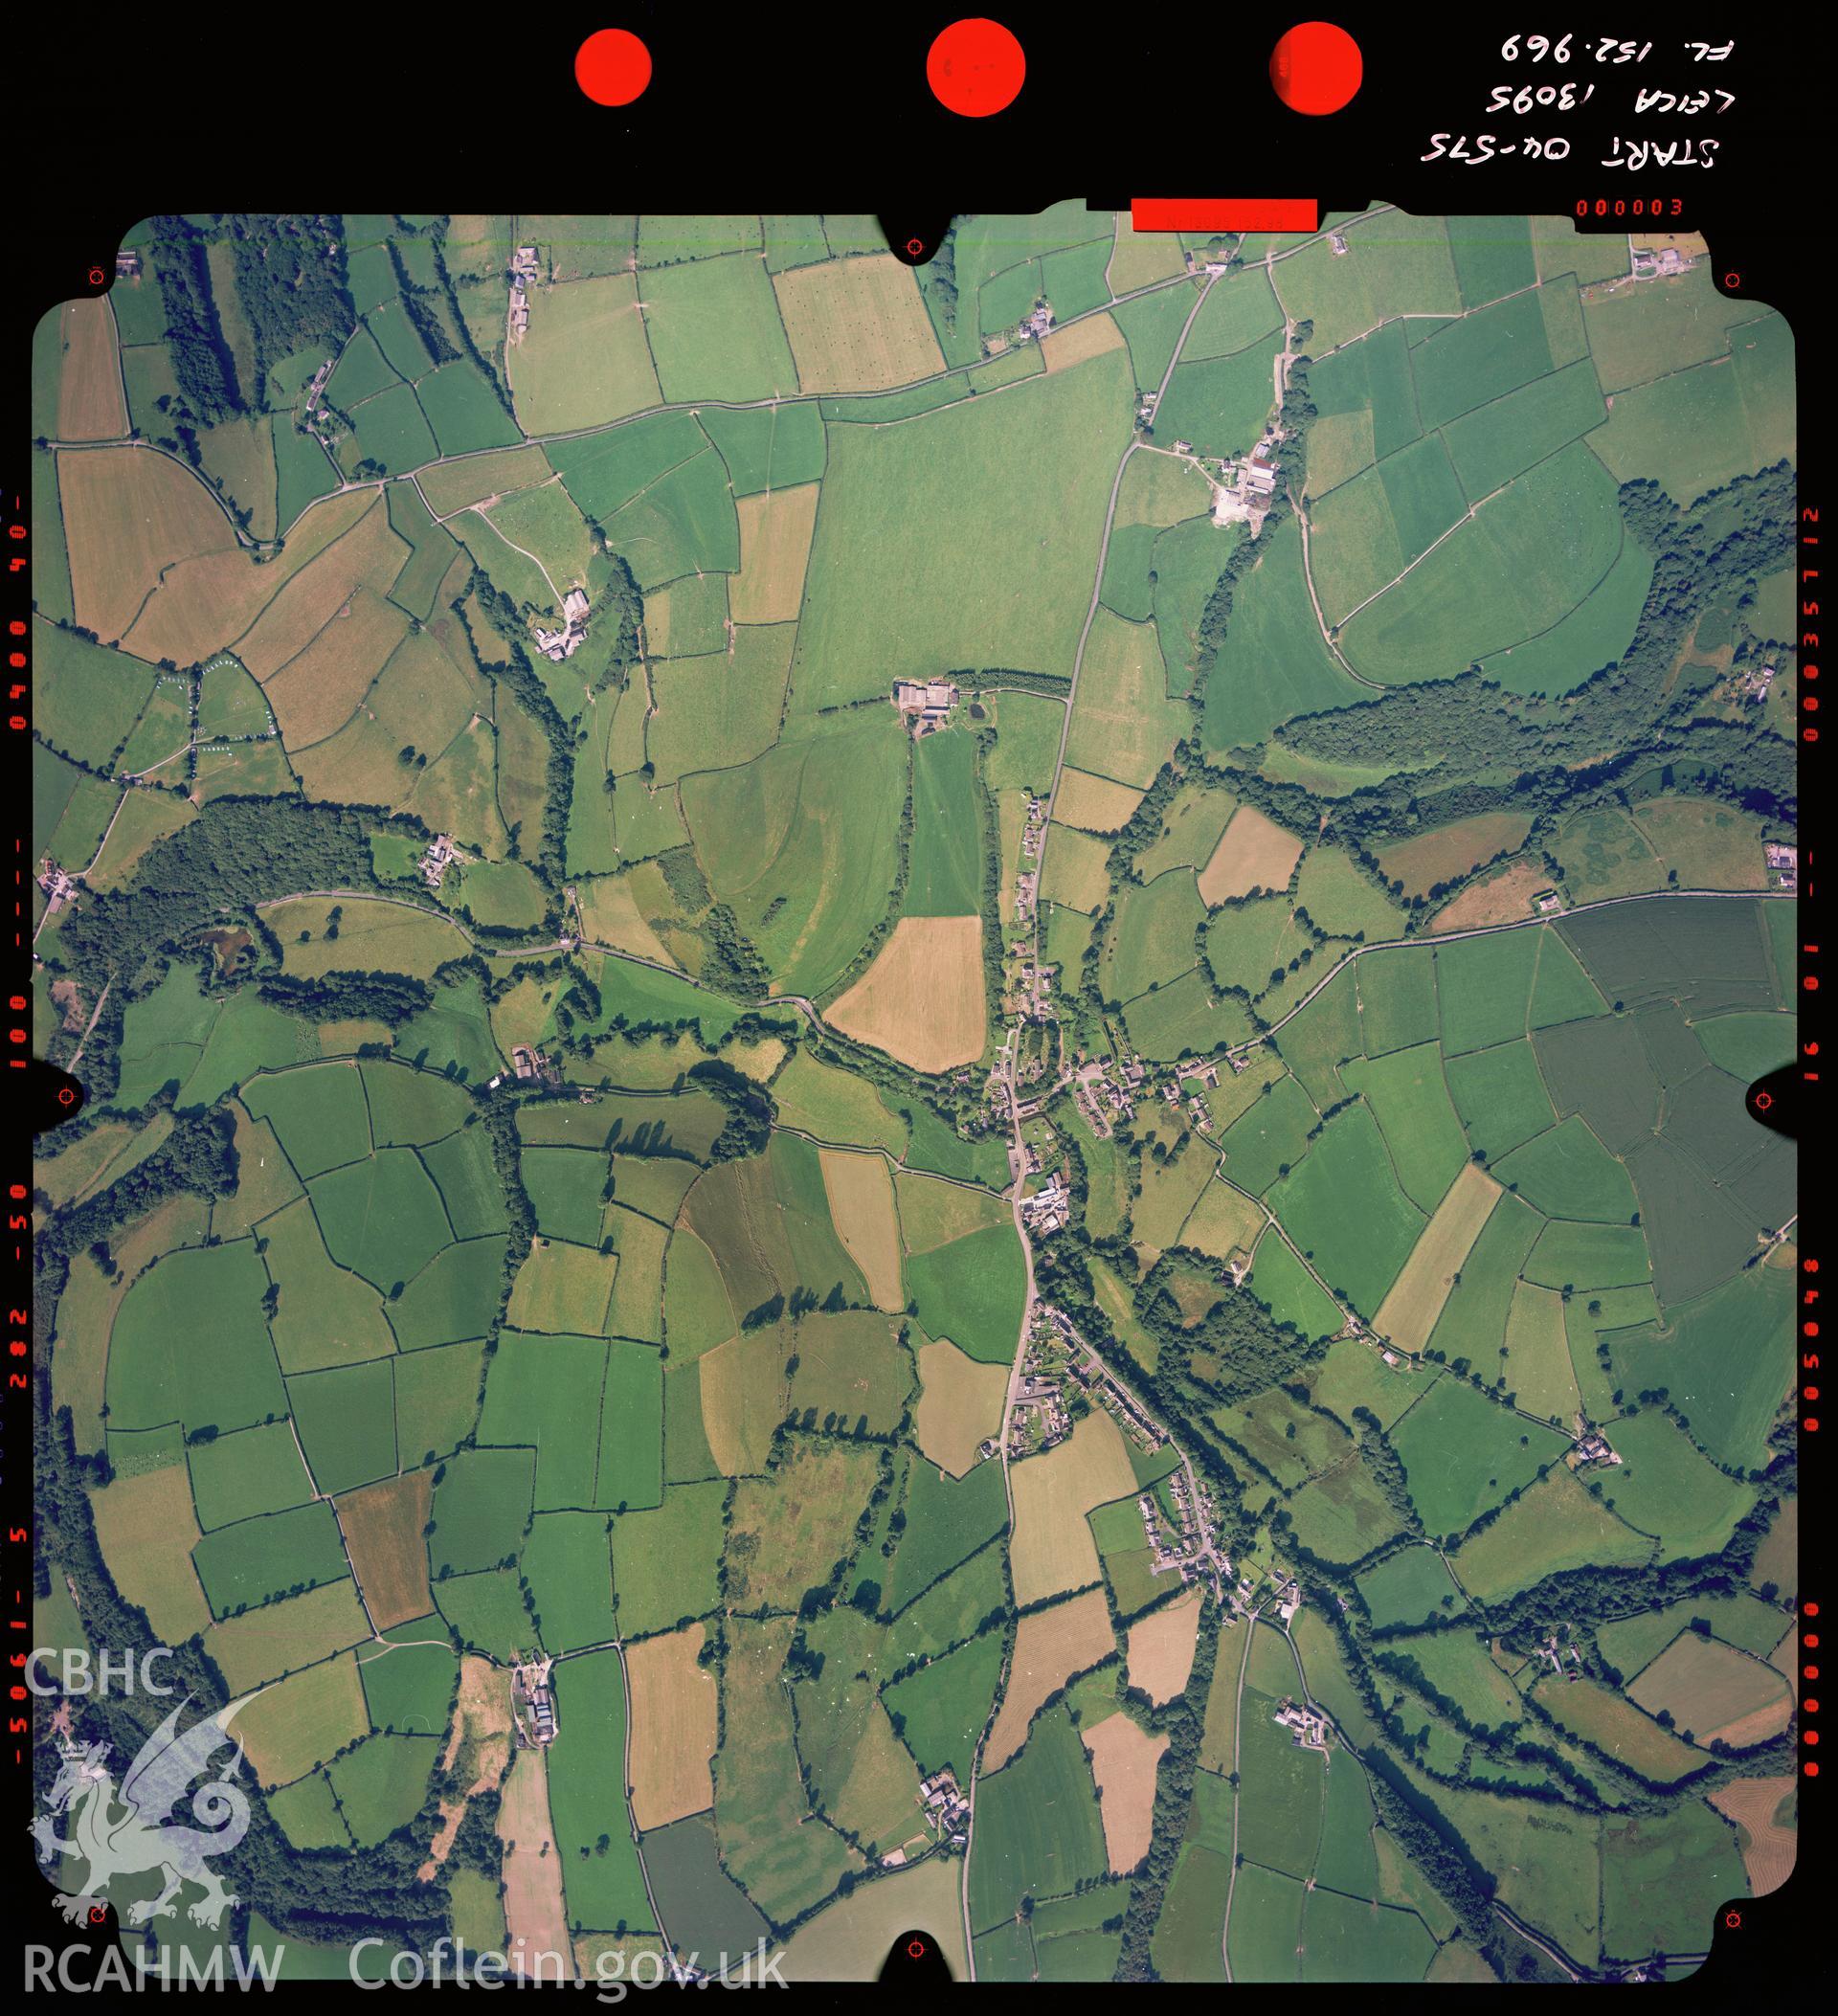 Digital copy of an Ordnance Survey aerial view of Meidrim dated 2004.